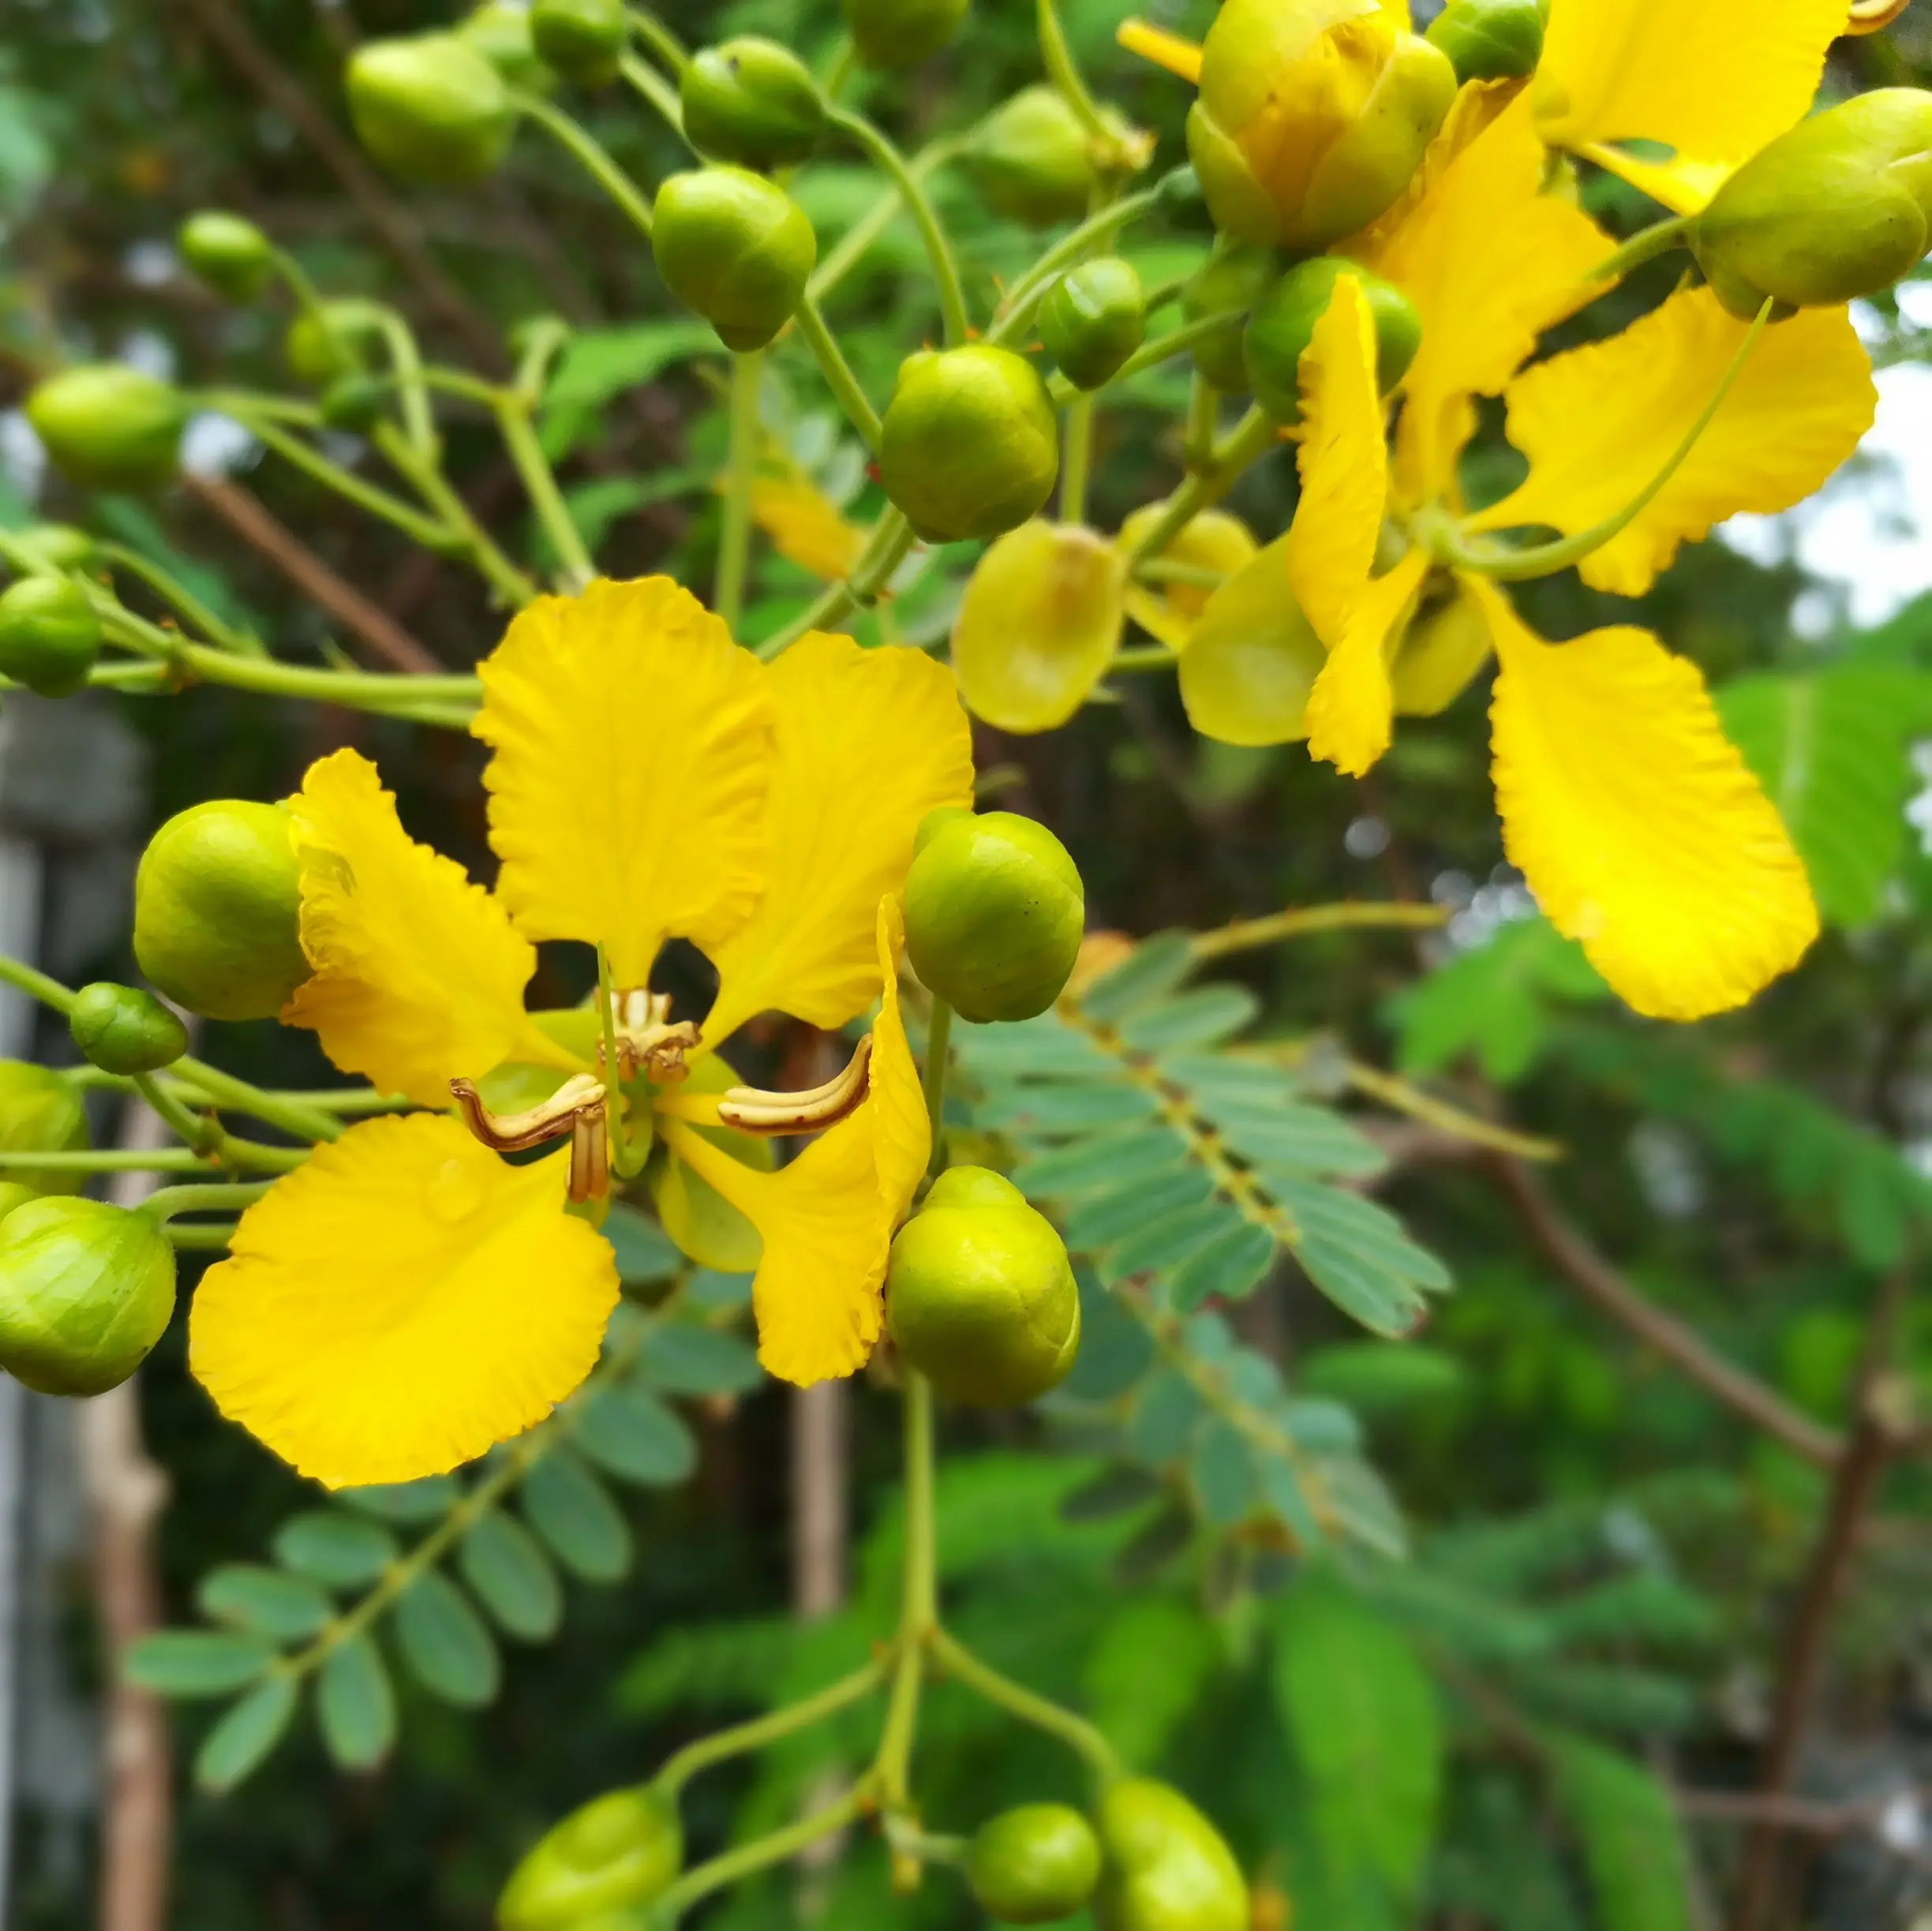 Senna Auriculata-Hojas de Ranawara, Cassia, Avarai, sumamai, Avartaki, casia, hojas de hierbas